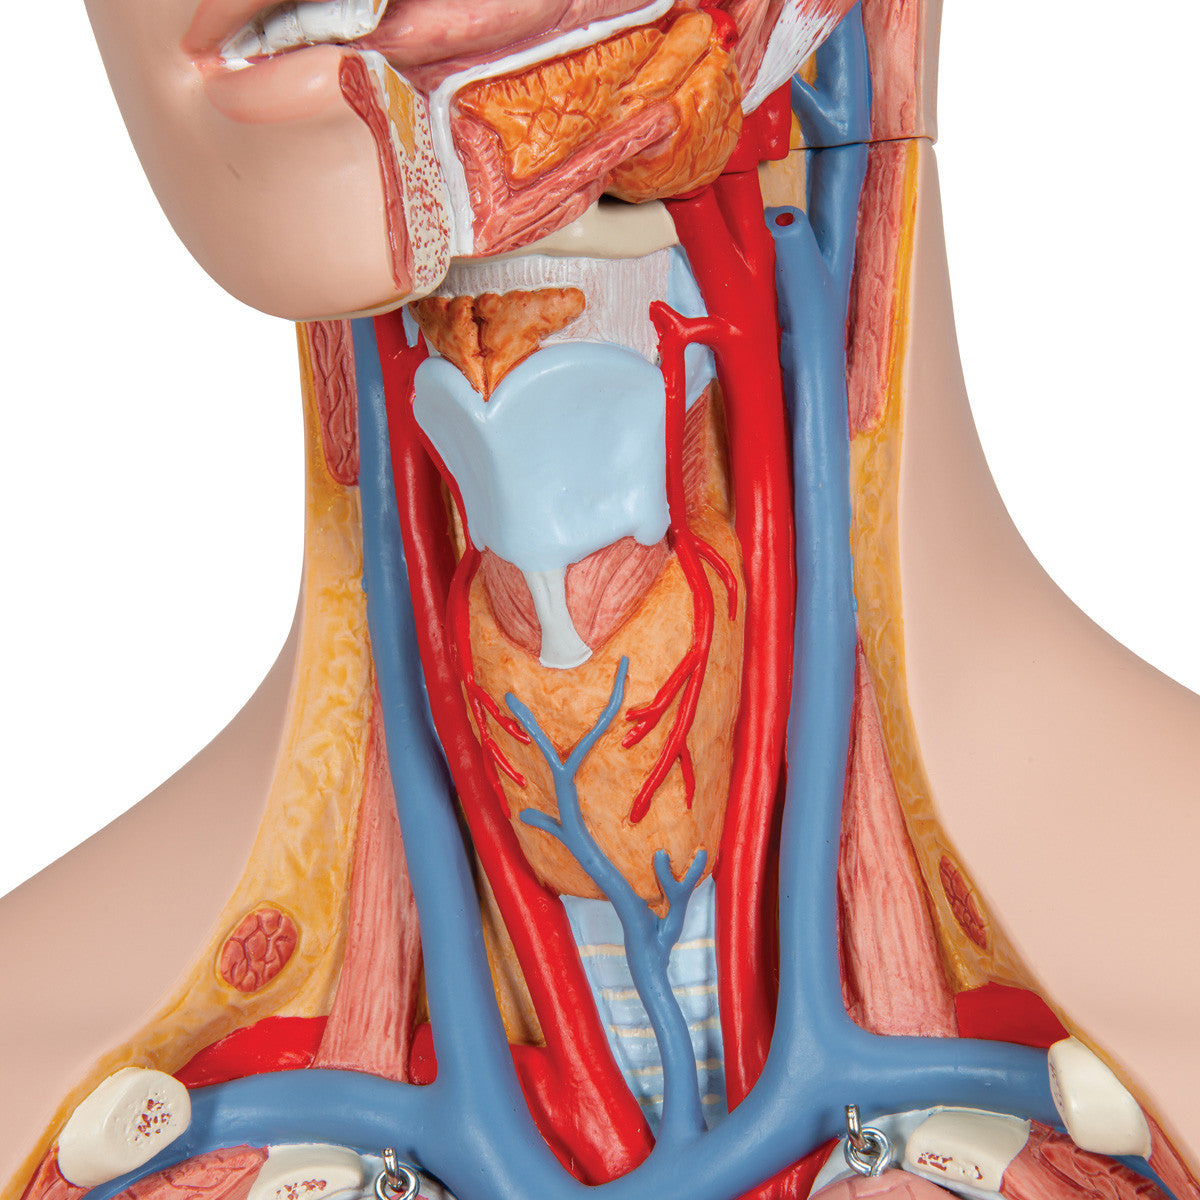 14-Part Unisex Torso - vascular and neck detail